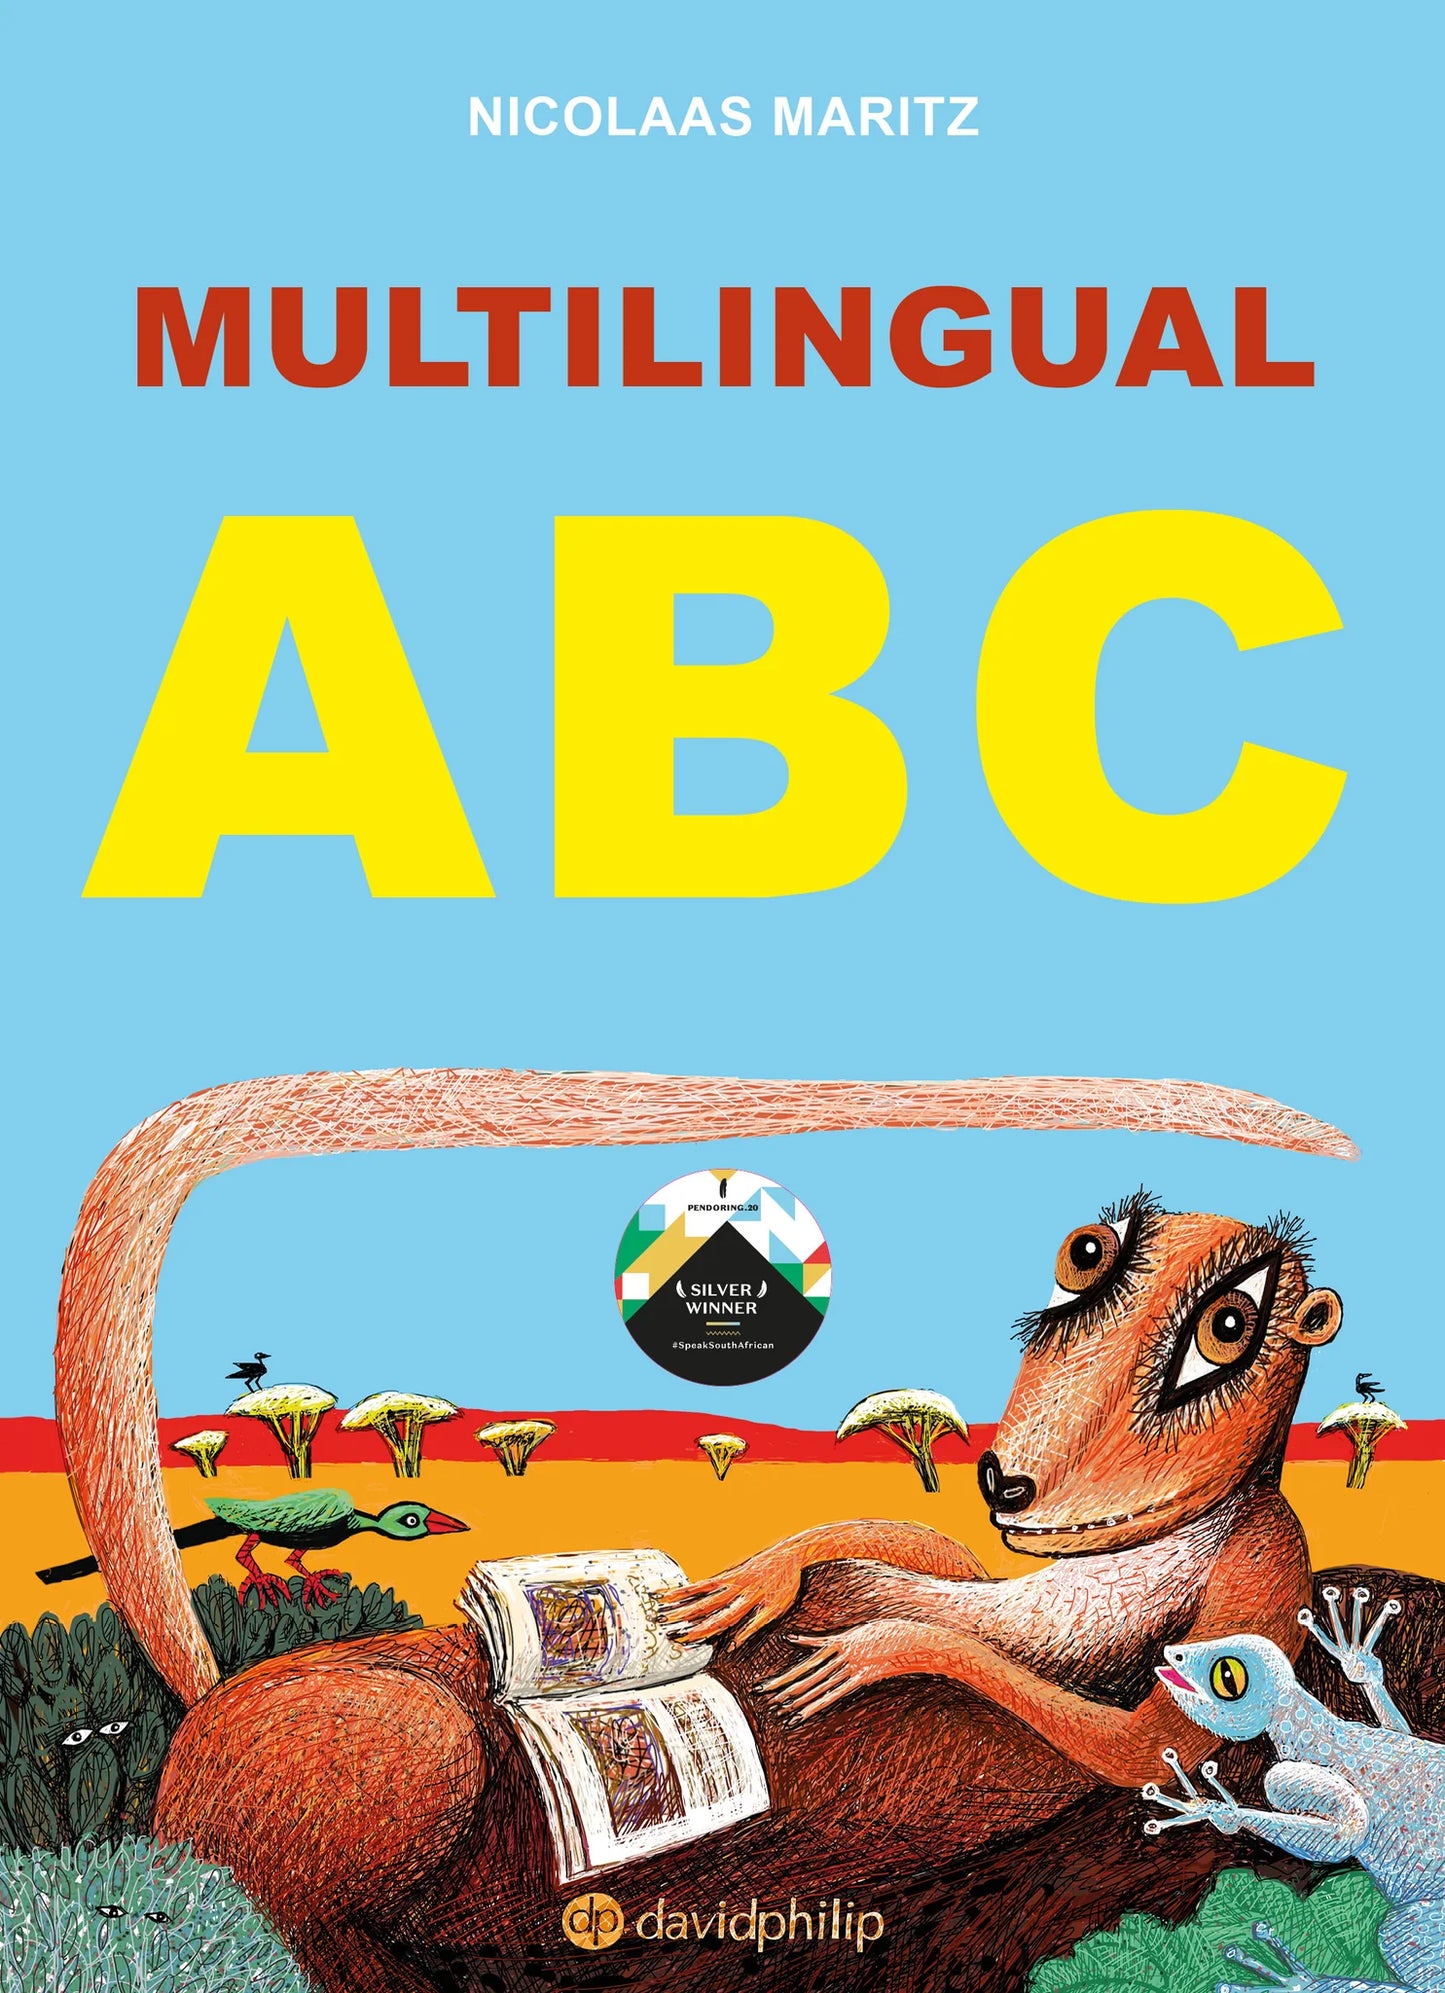 A Multilingual ABC, by Nicolaas Maritz